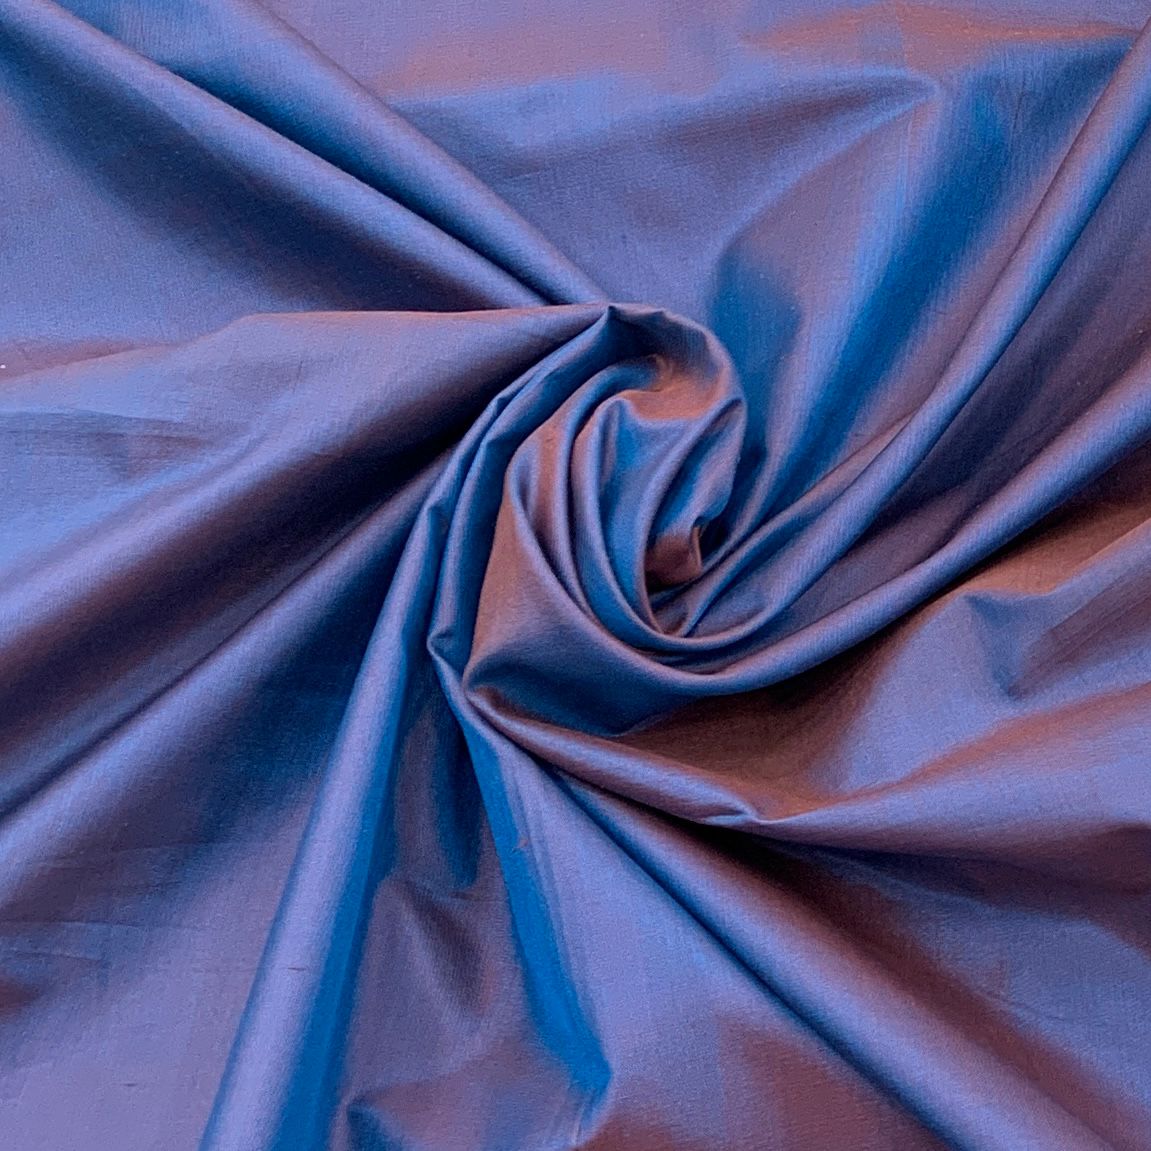 Royal blue satin fabric 100% silk